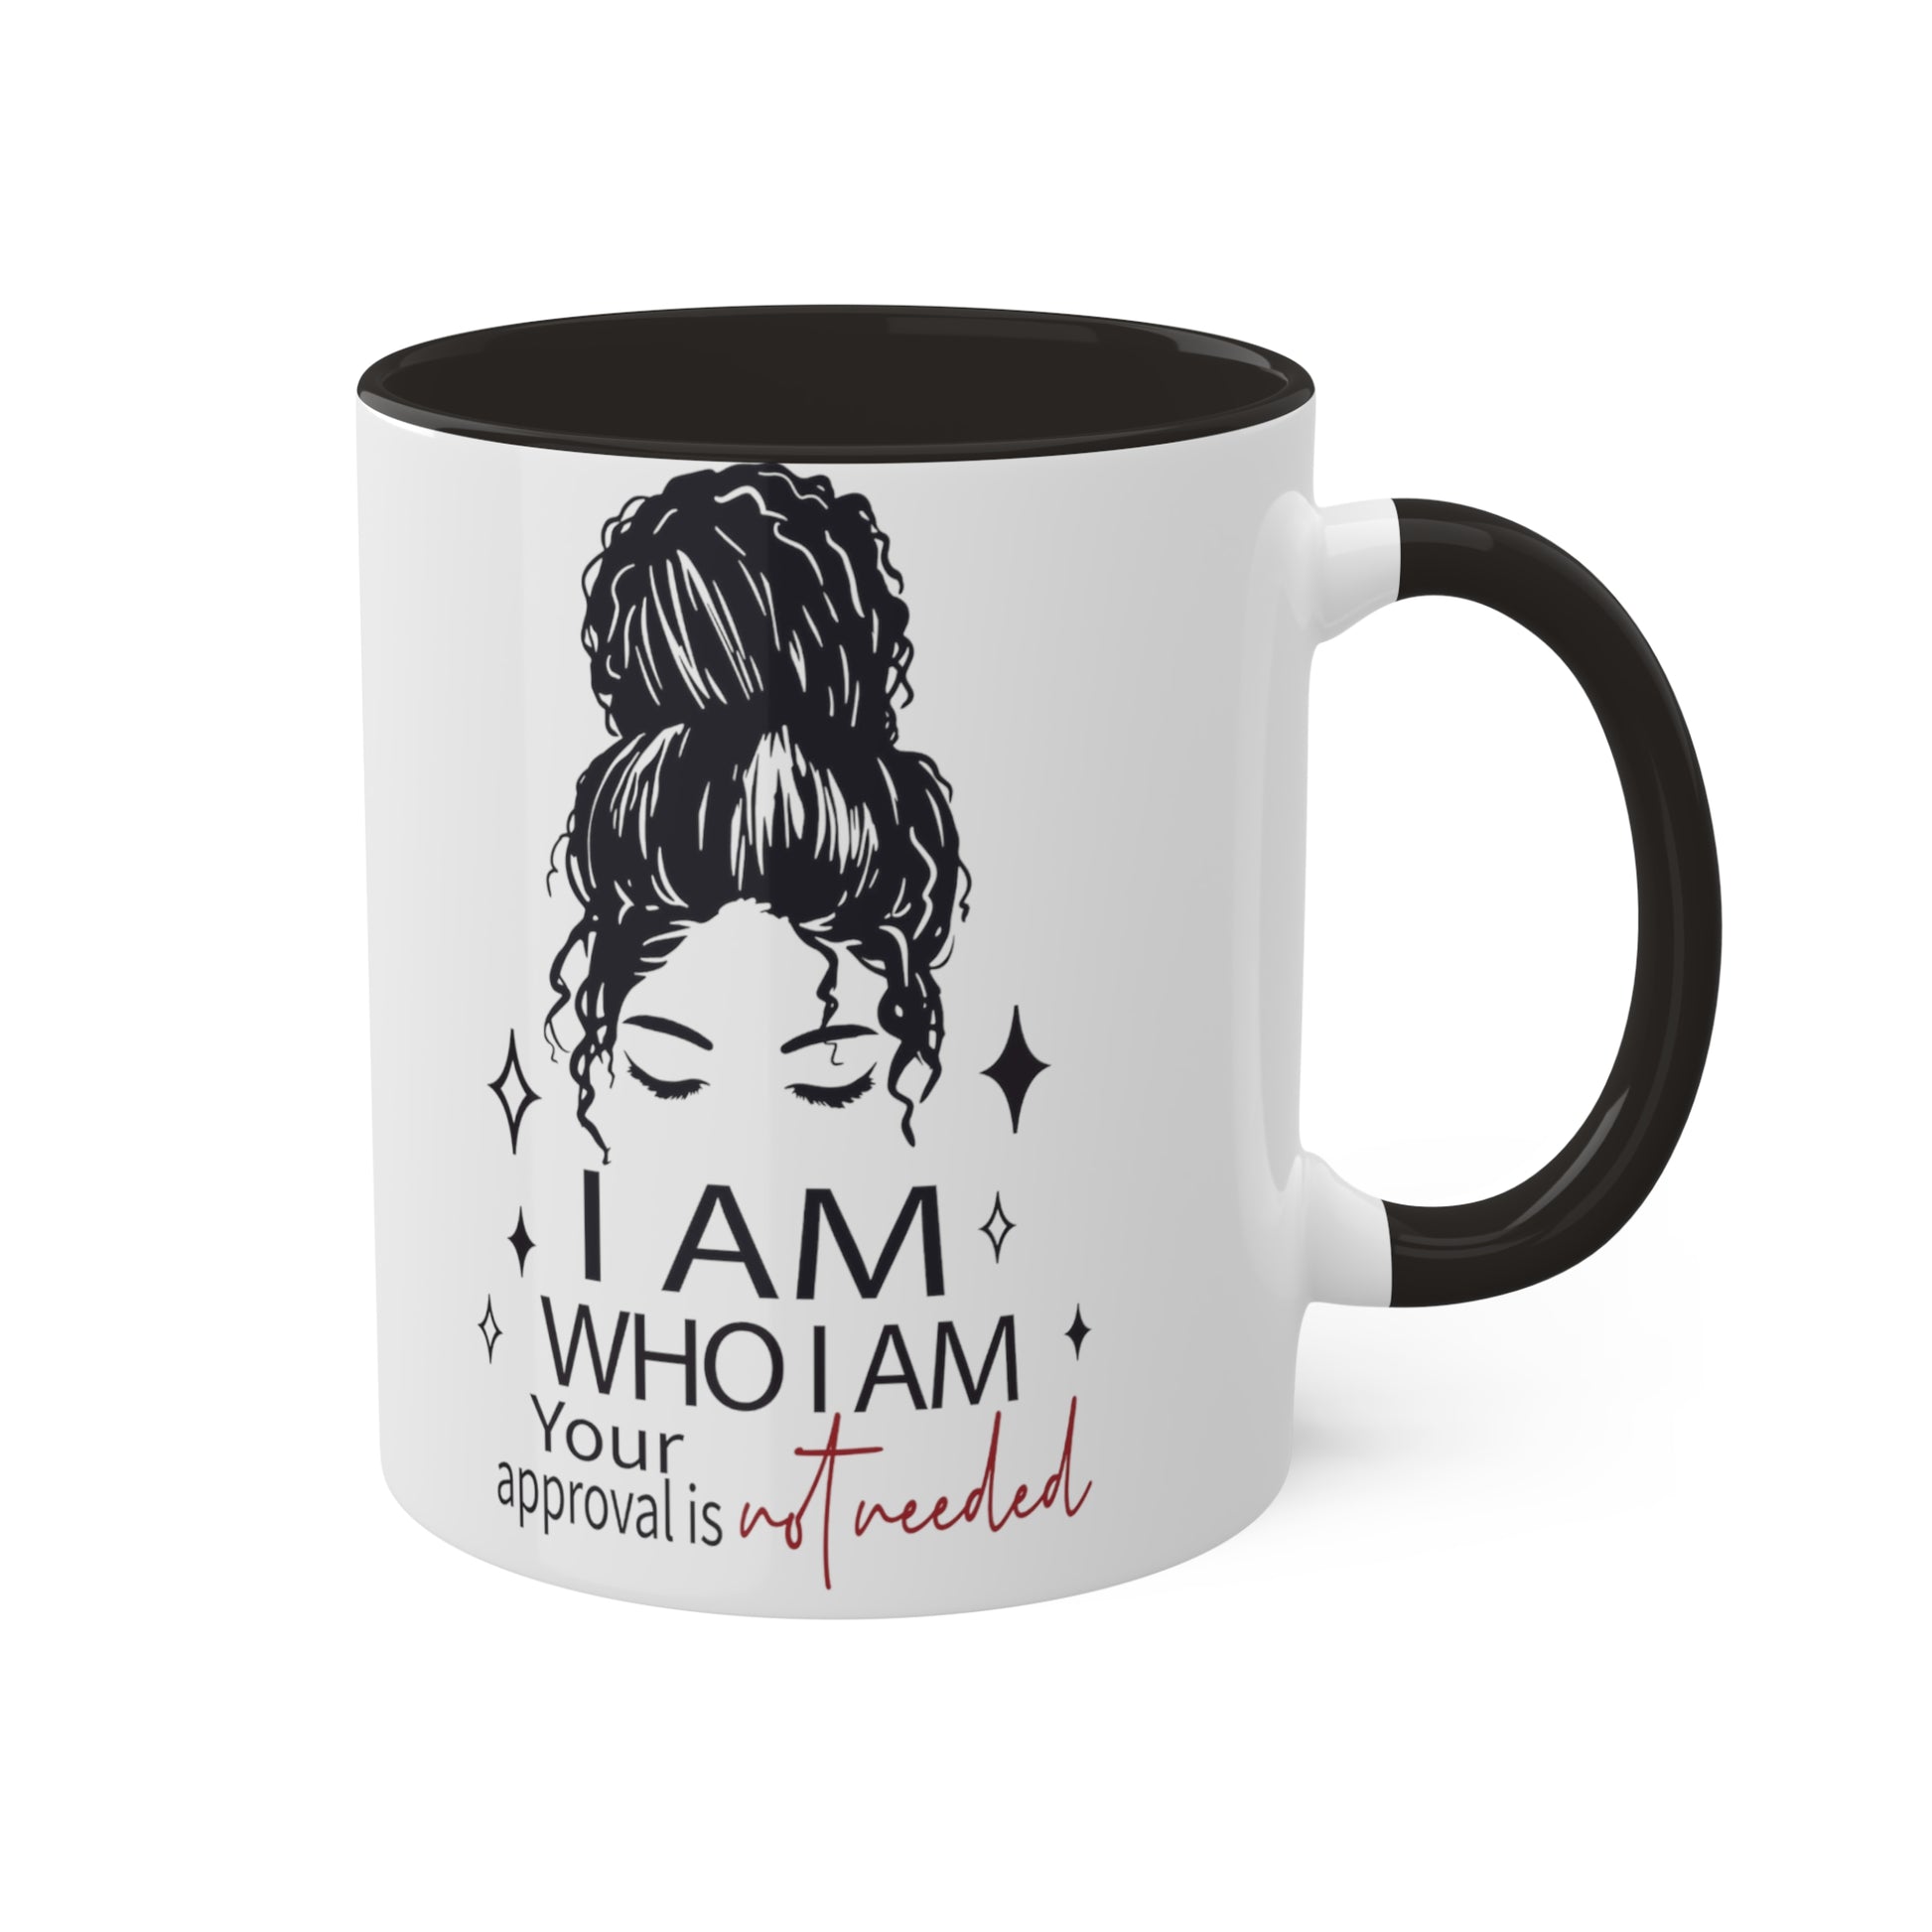 tonic tea mug for a self love internal healing journey hosted by Shamara Daniels